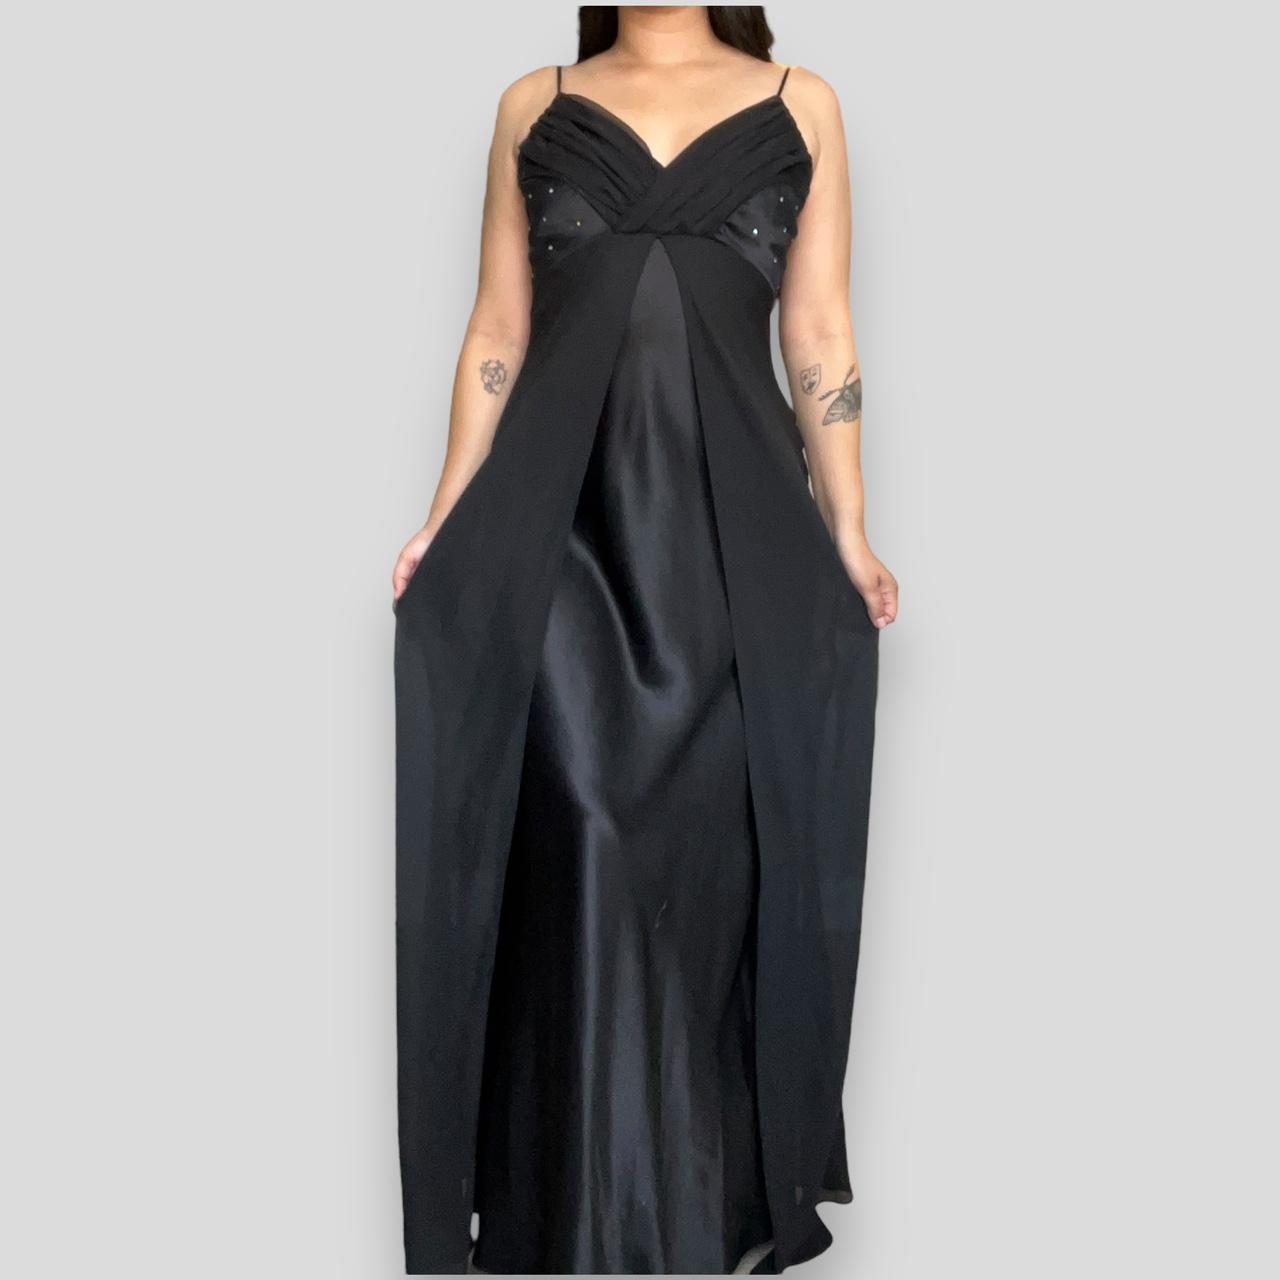 Aspeed Design Women's Black Dress